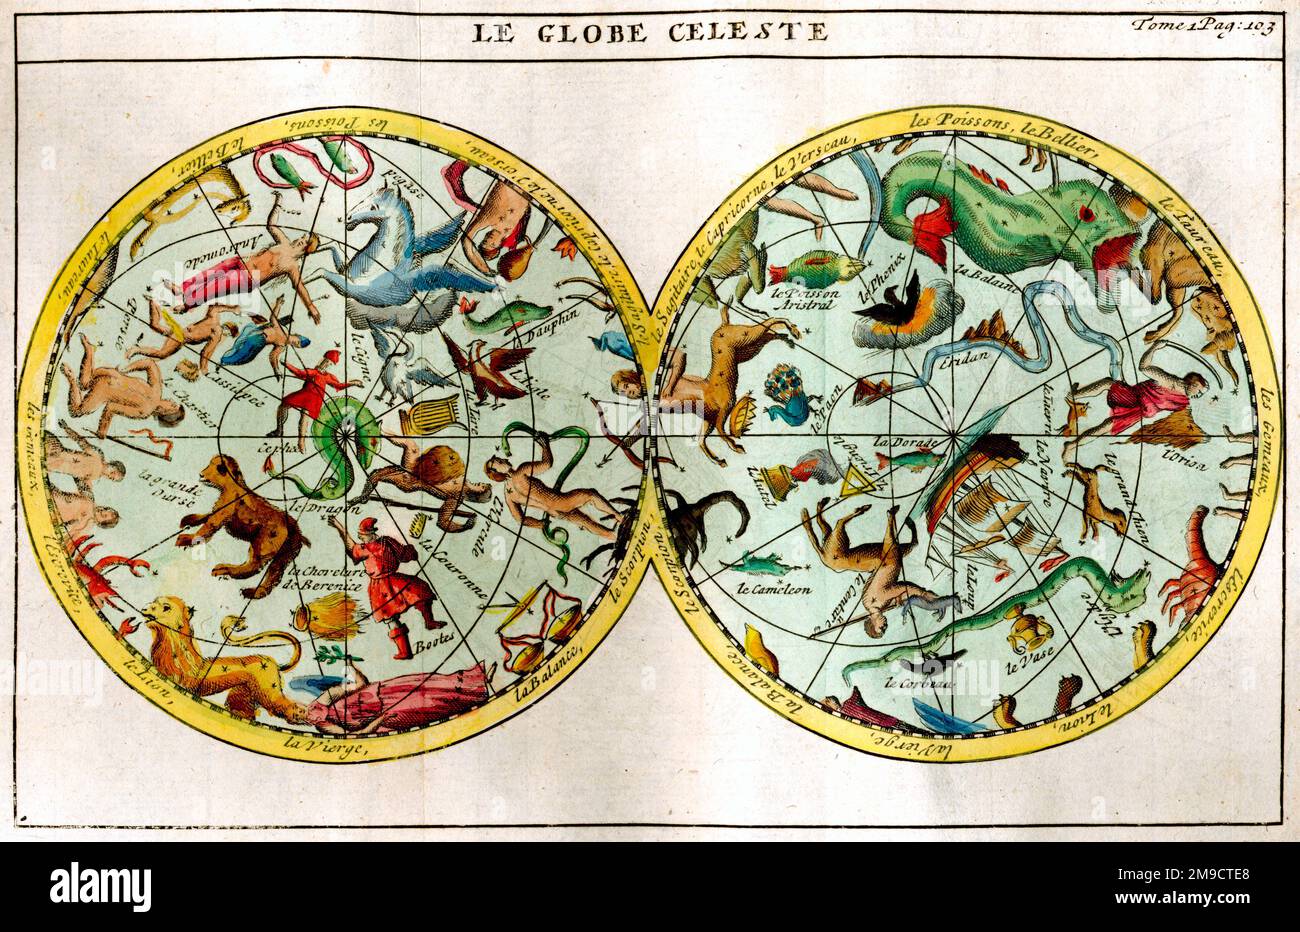 Globe Celeste - Karte der Sterne und Sternbilder am Himmel Stockfoto